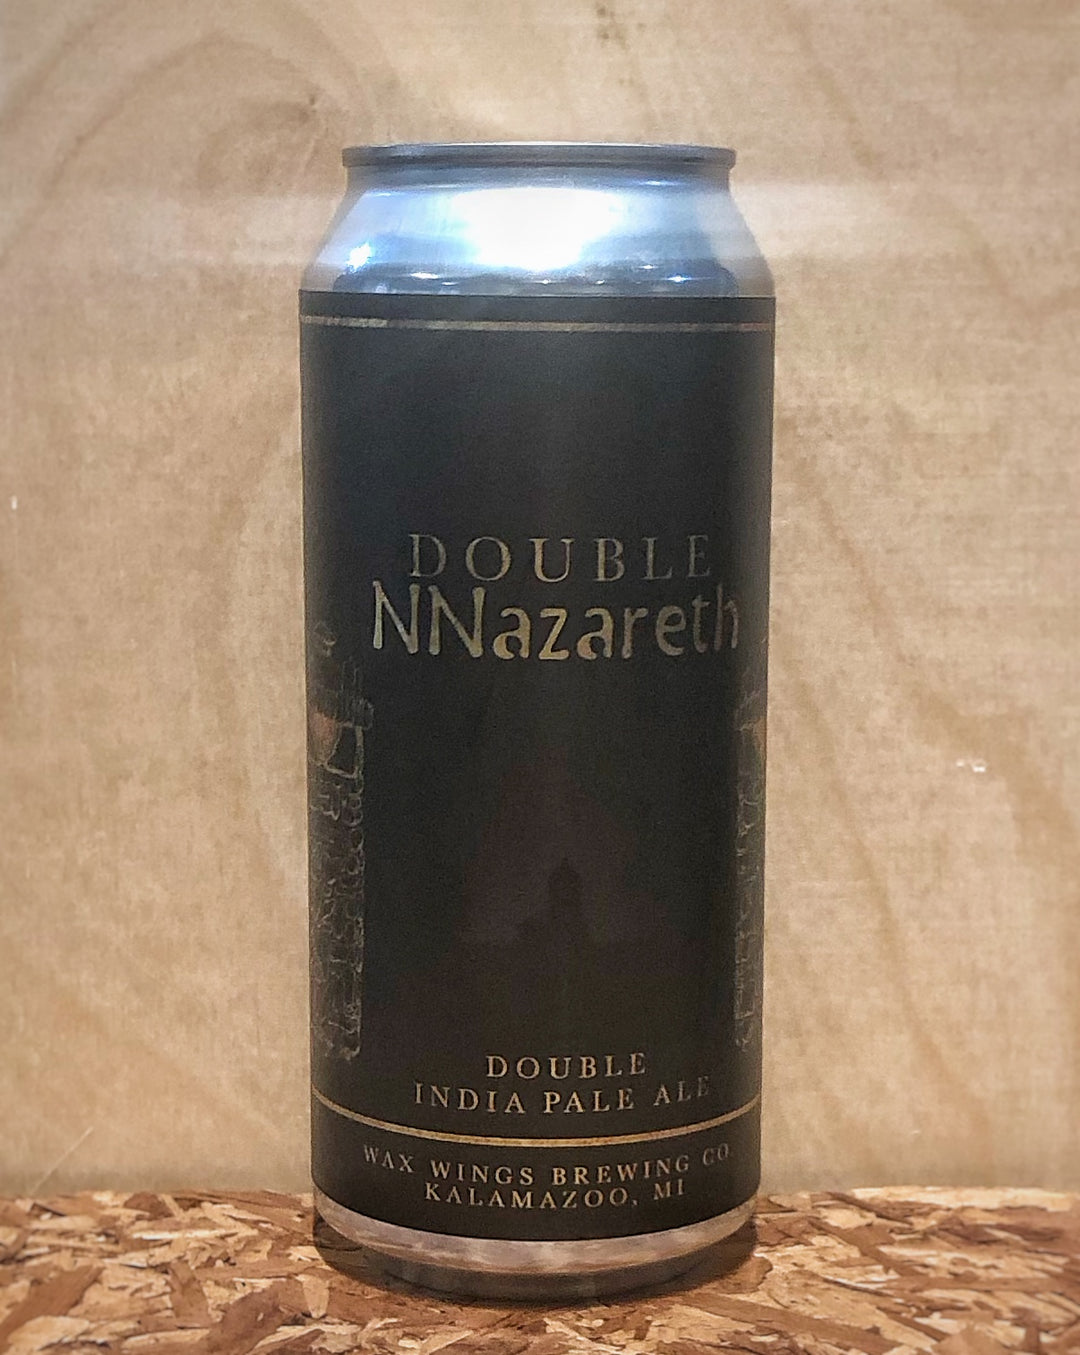 Wax Wings Brewing Co. 'Double NNazareth' Double IPA (Kalamazoo, MI)